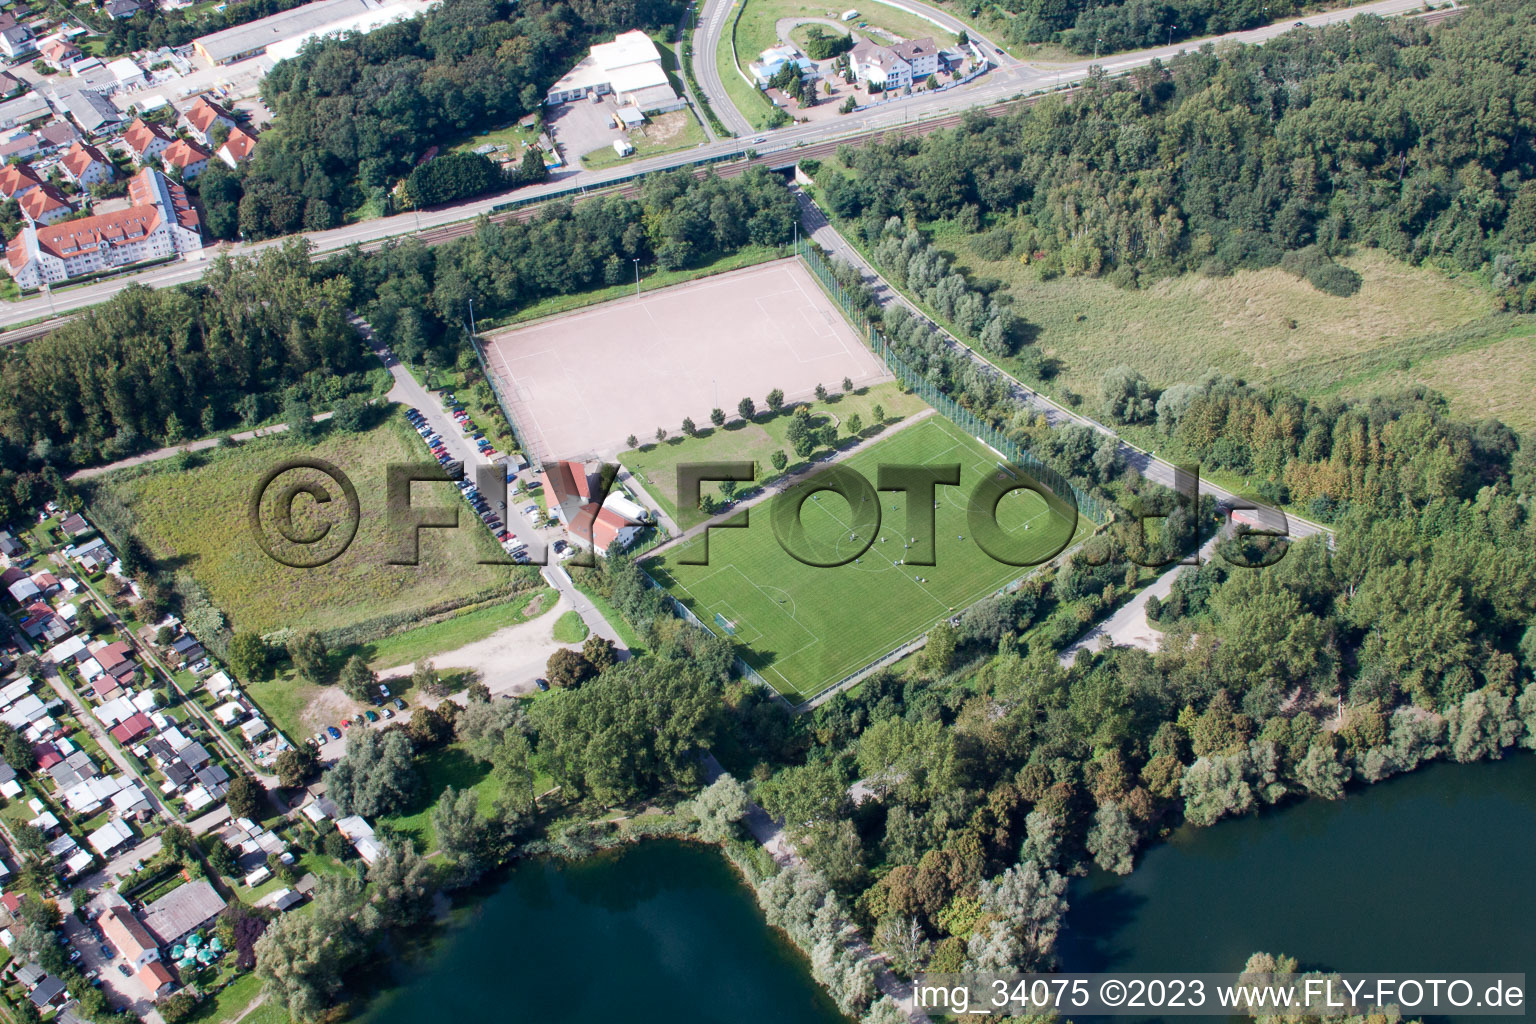 Sports fields in the district Sondernheim in Germersheim in the state Rhineland-Palatinate, Germany